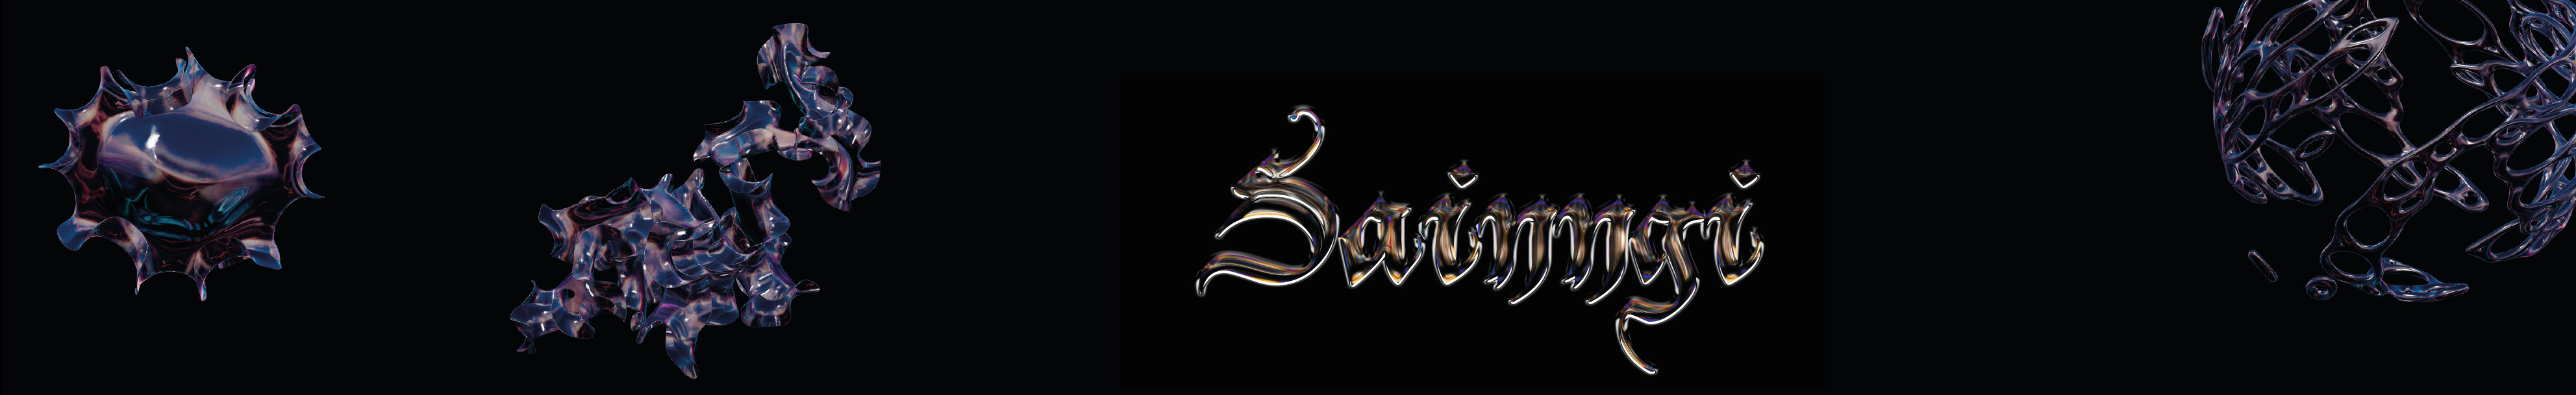 Saida | sainngi's profile banner